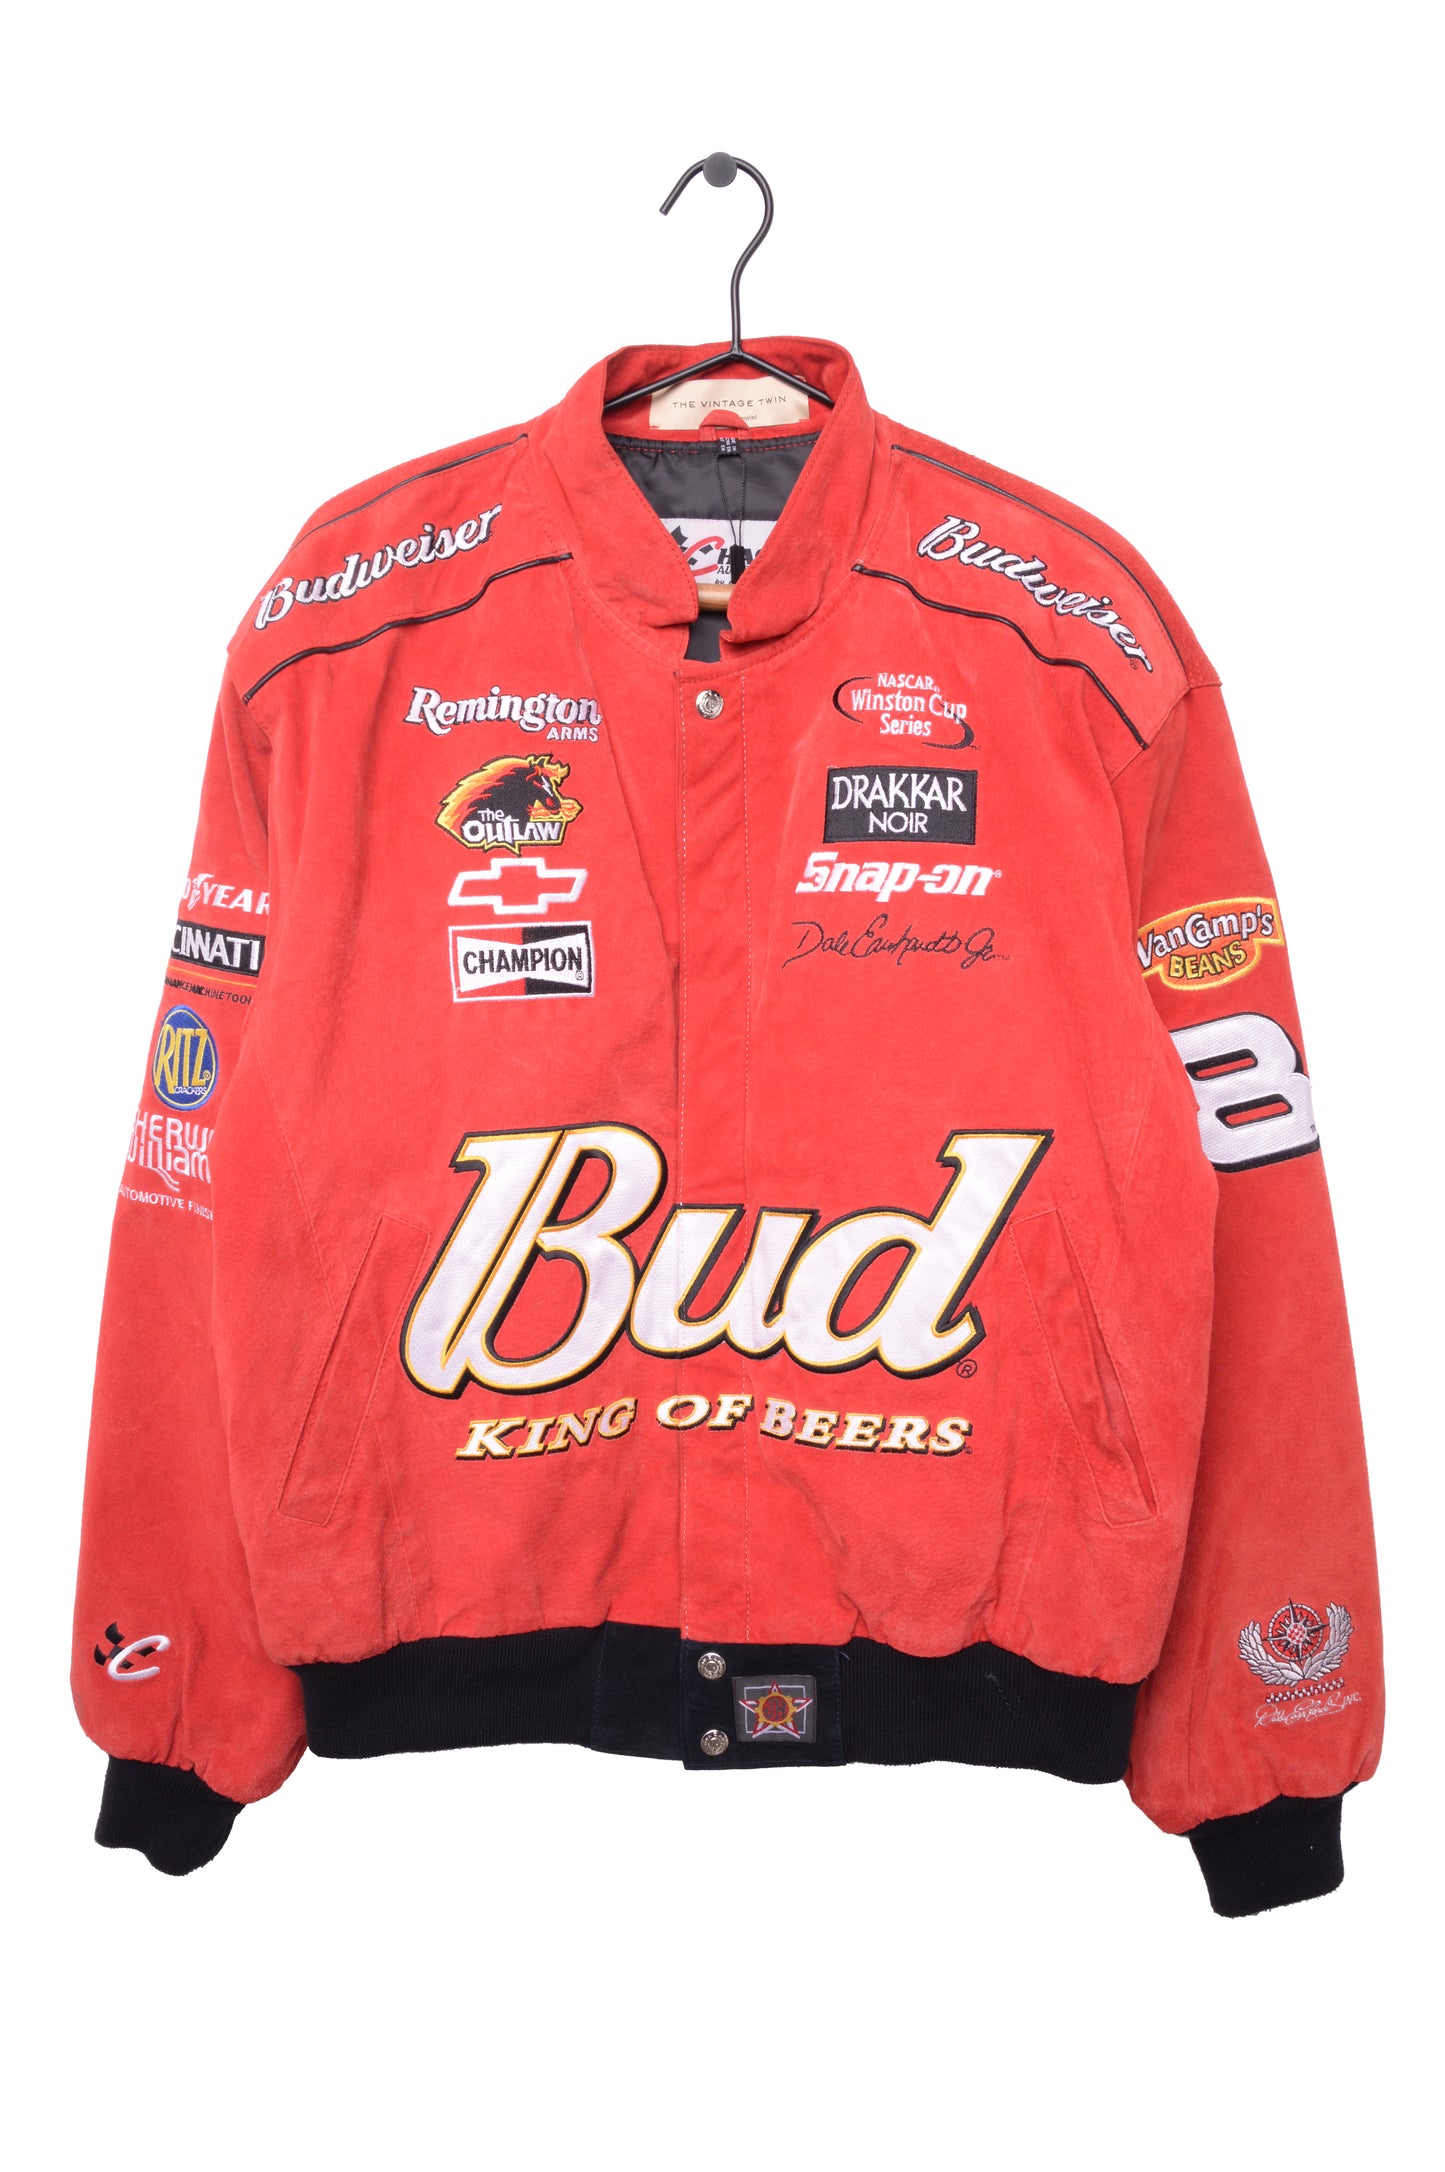 Budweiser Leather Racing Jacket